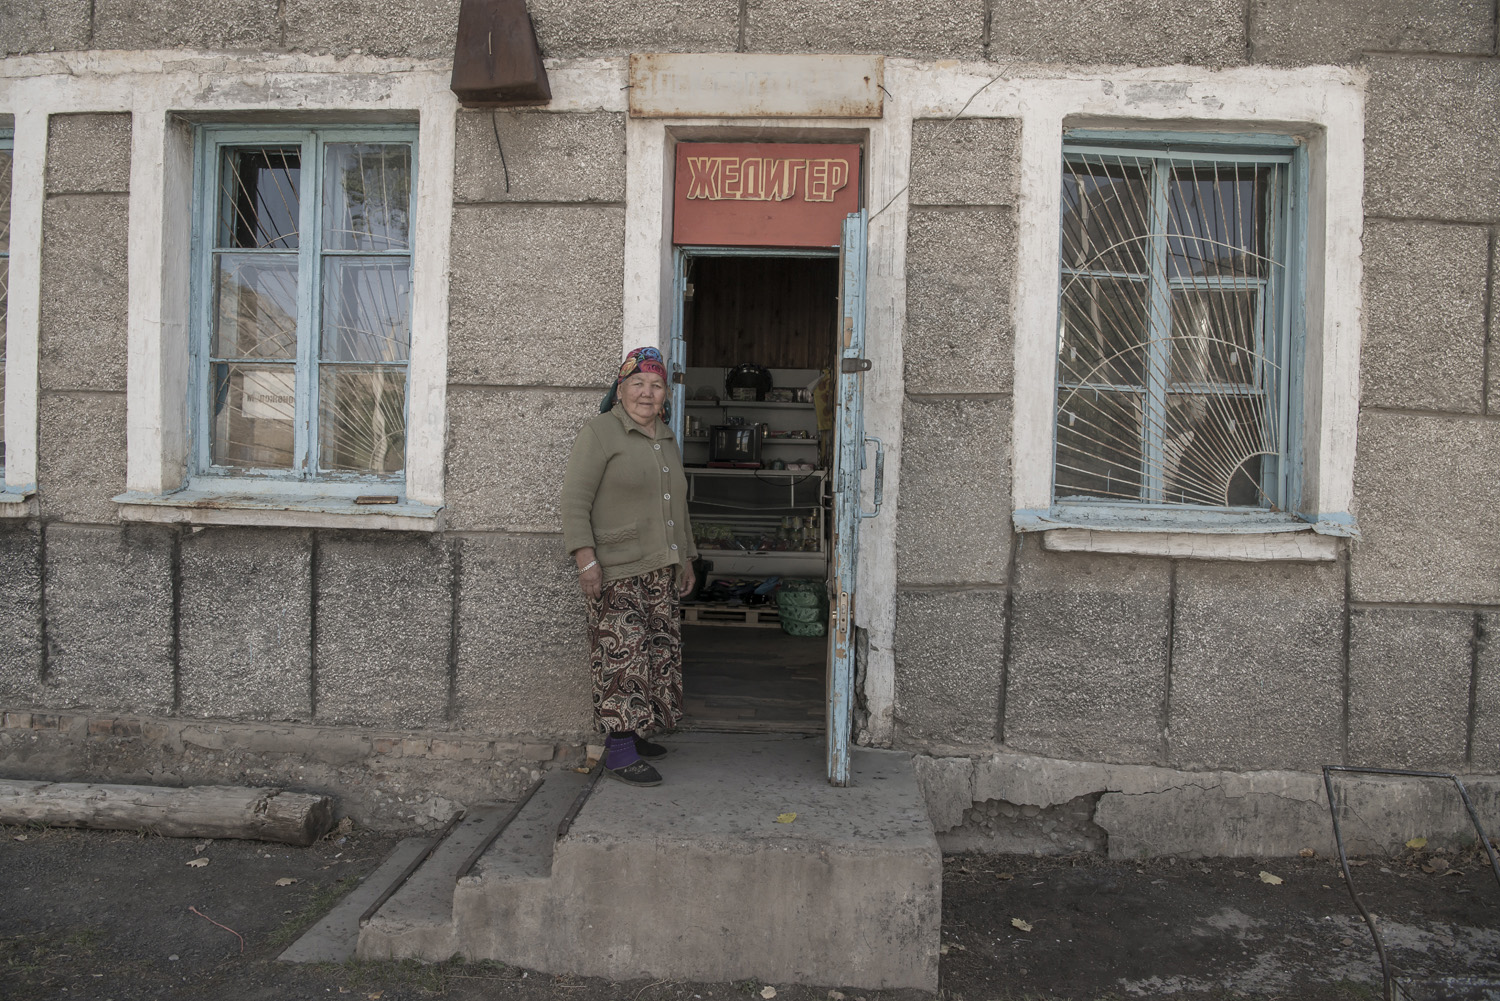 min-kush-soviet-uranium-mining-town-industrial-Russia-Kyrgyzstan-ruins-soviet-sign-jo-kearney-photos-video-photography.soviet-shop-abacus.jpg